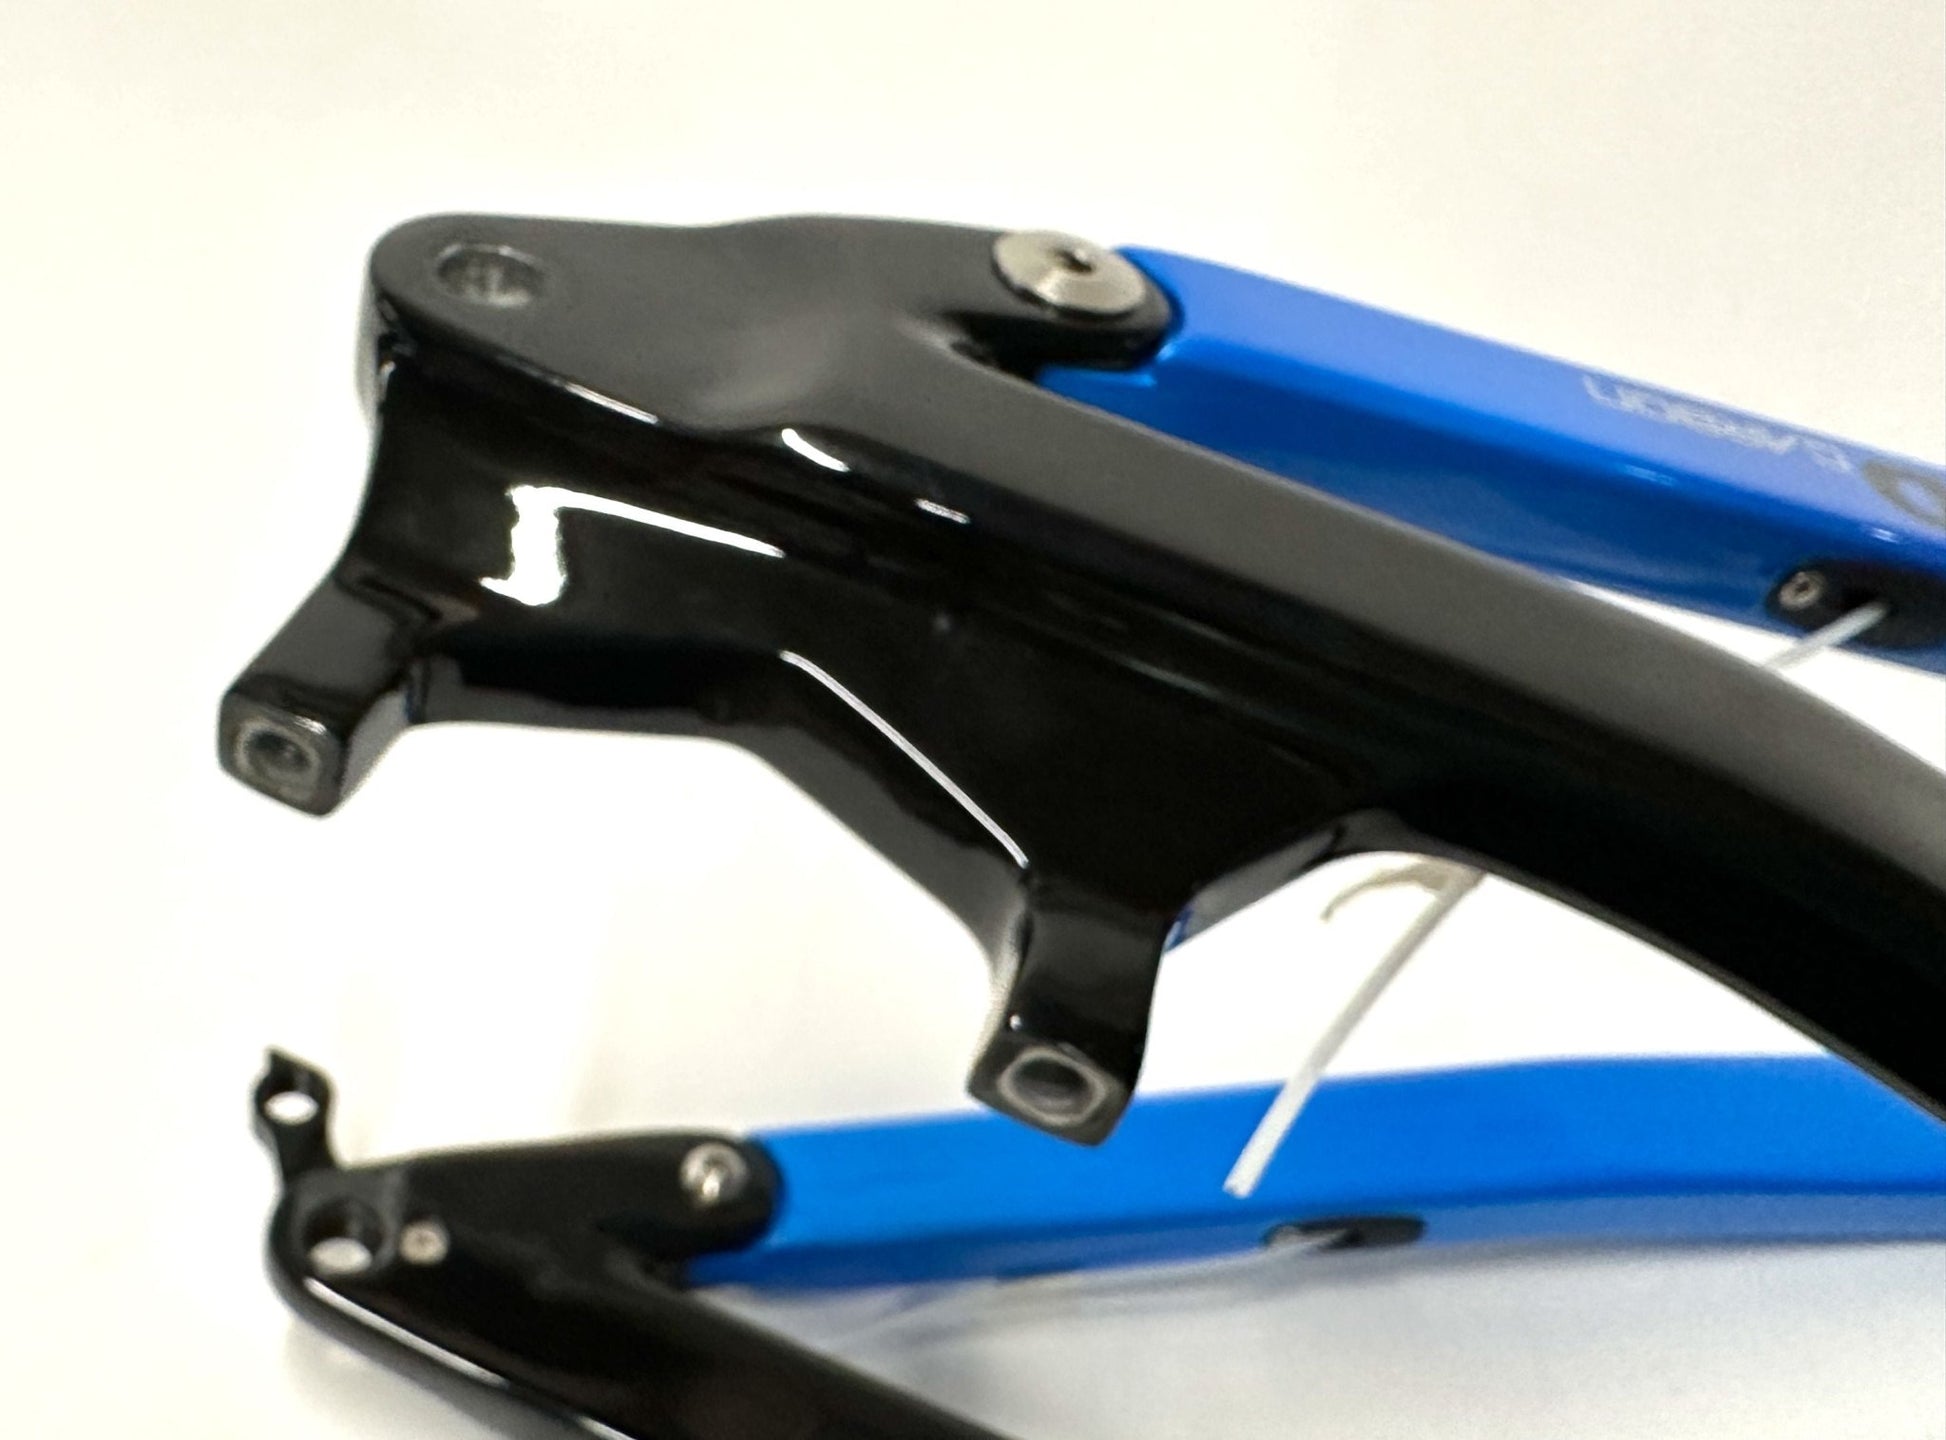 FRAMED 17" Montana Carbon Full Suspension Fat Bike Frame 27.5" Blue / Black NEW - Random Bike Parts